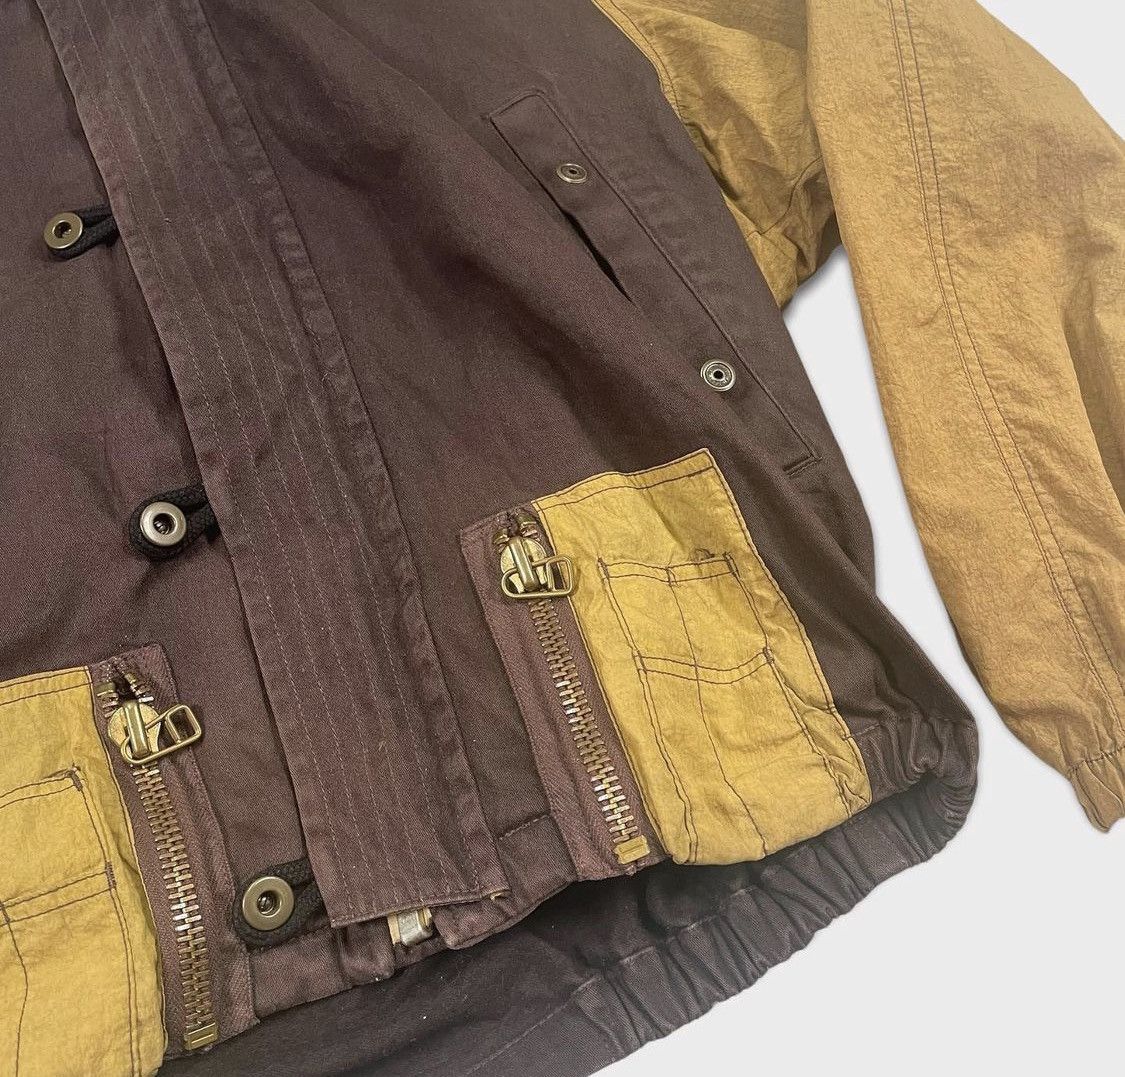 C.P. Company Massimo Osti RARE Archive jacket | Grailed